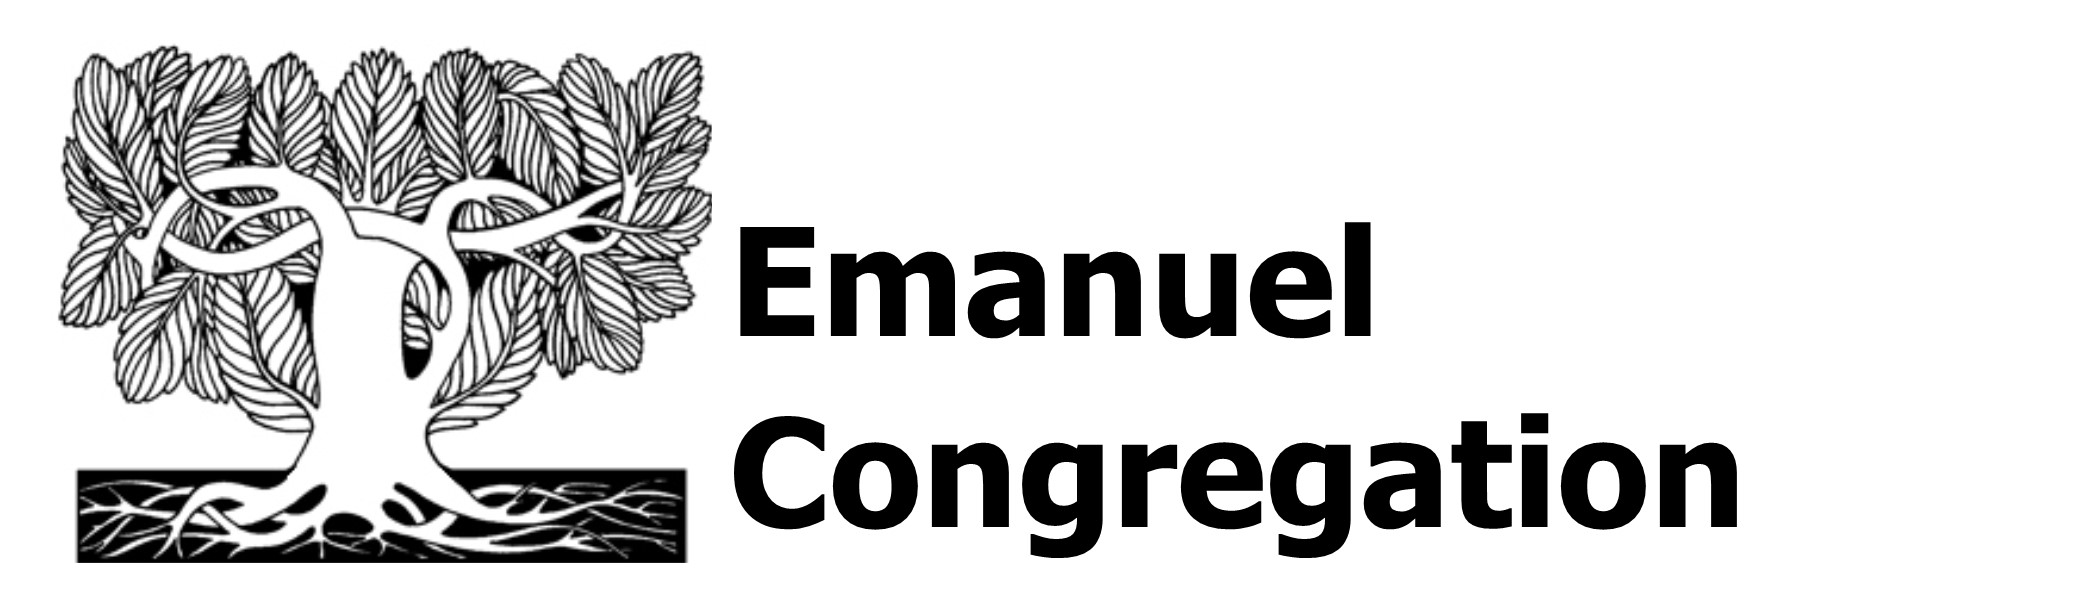 Emanuel Congregation - logo